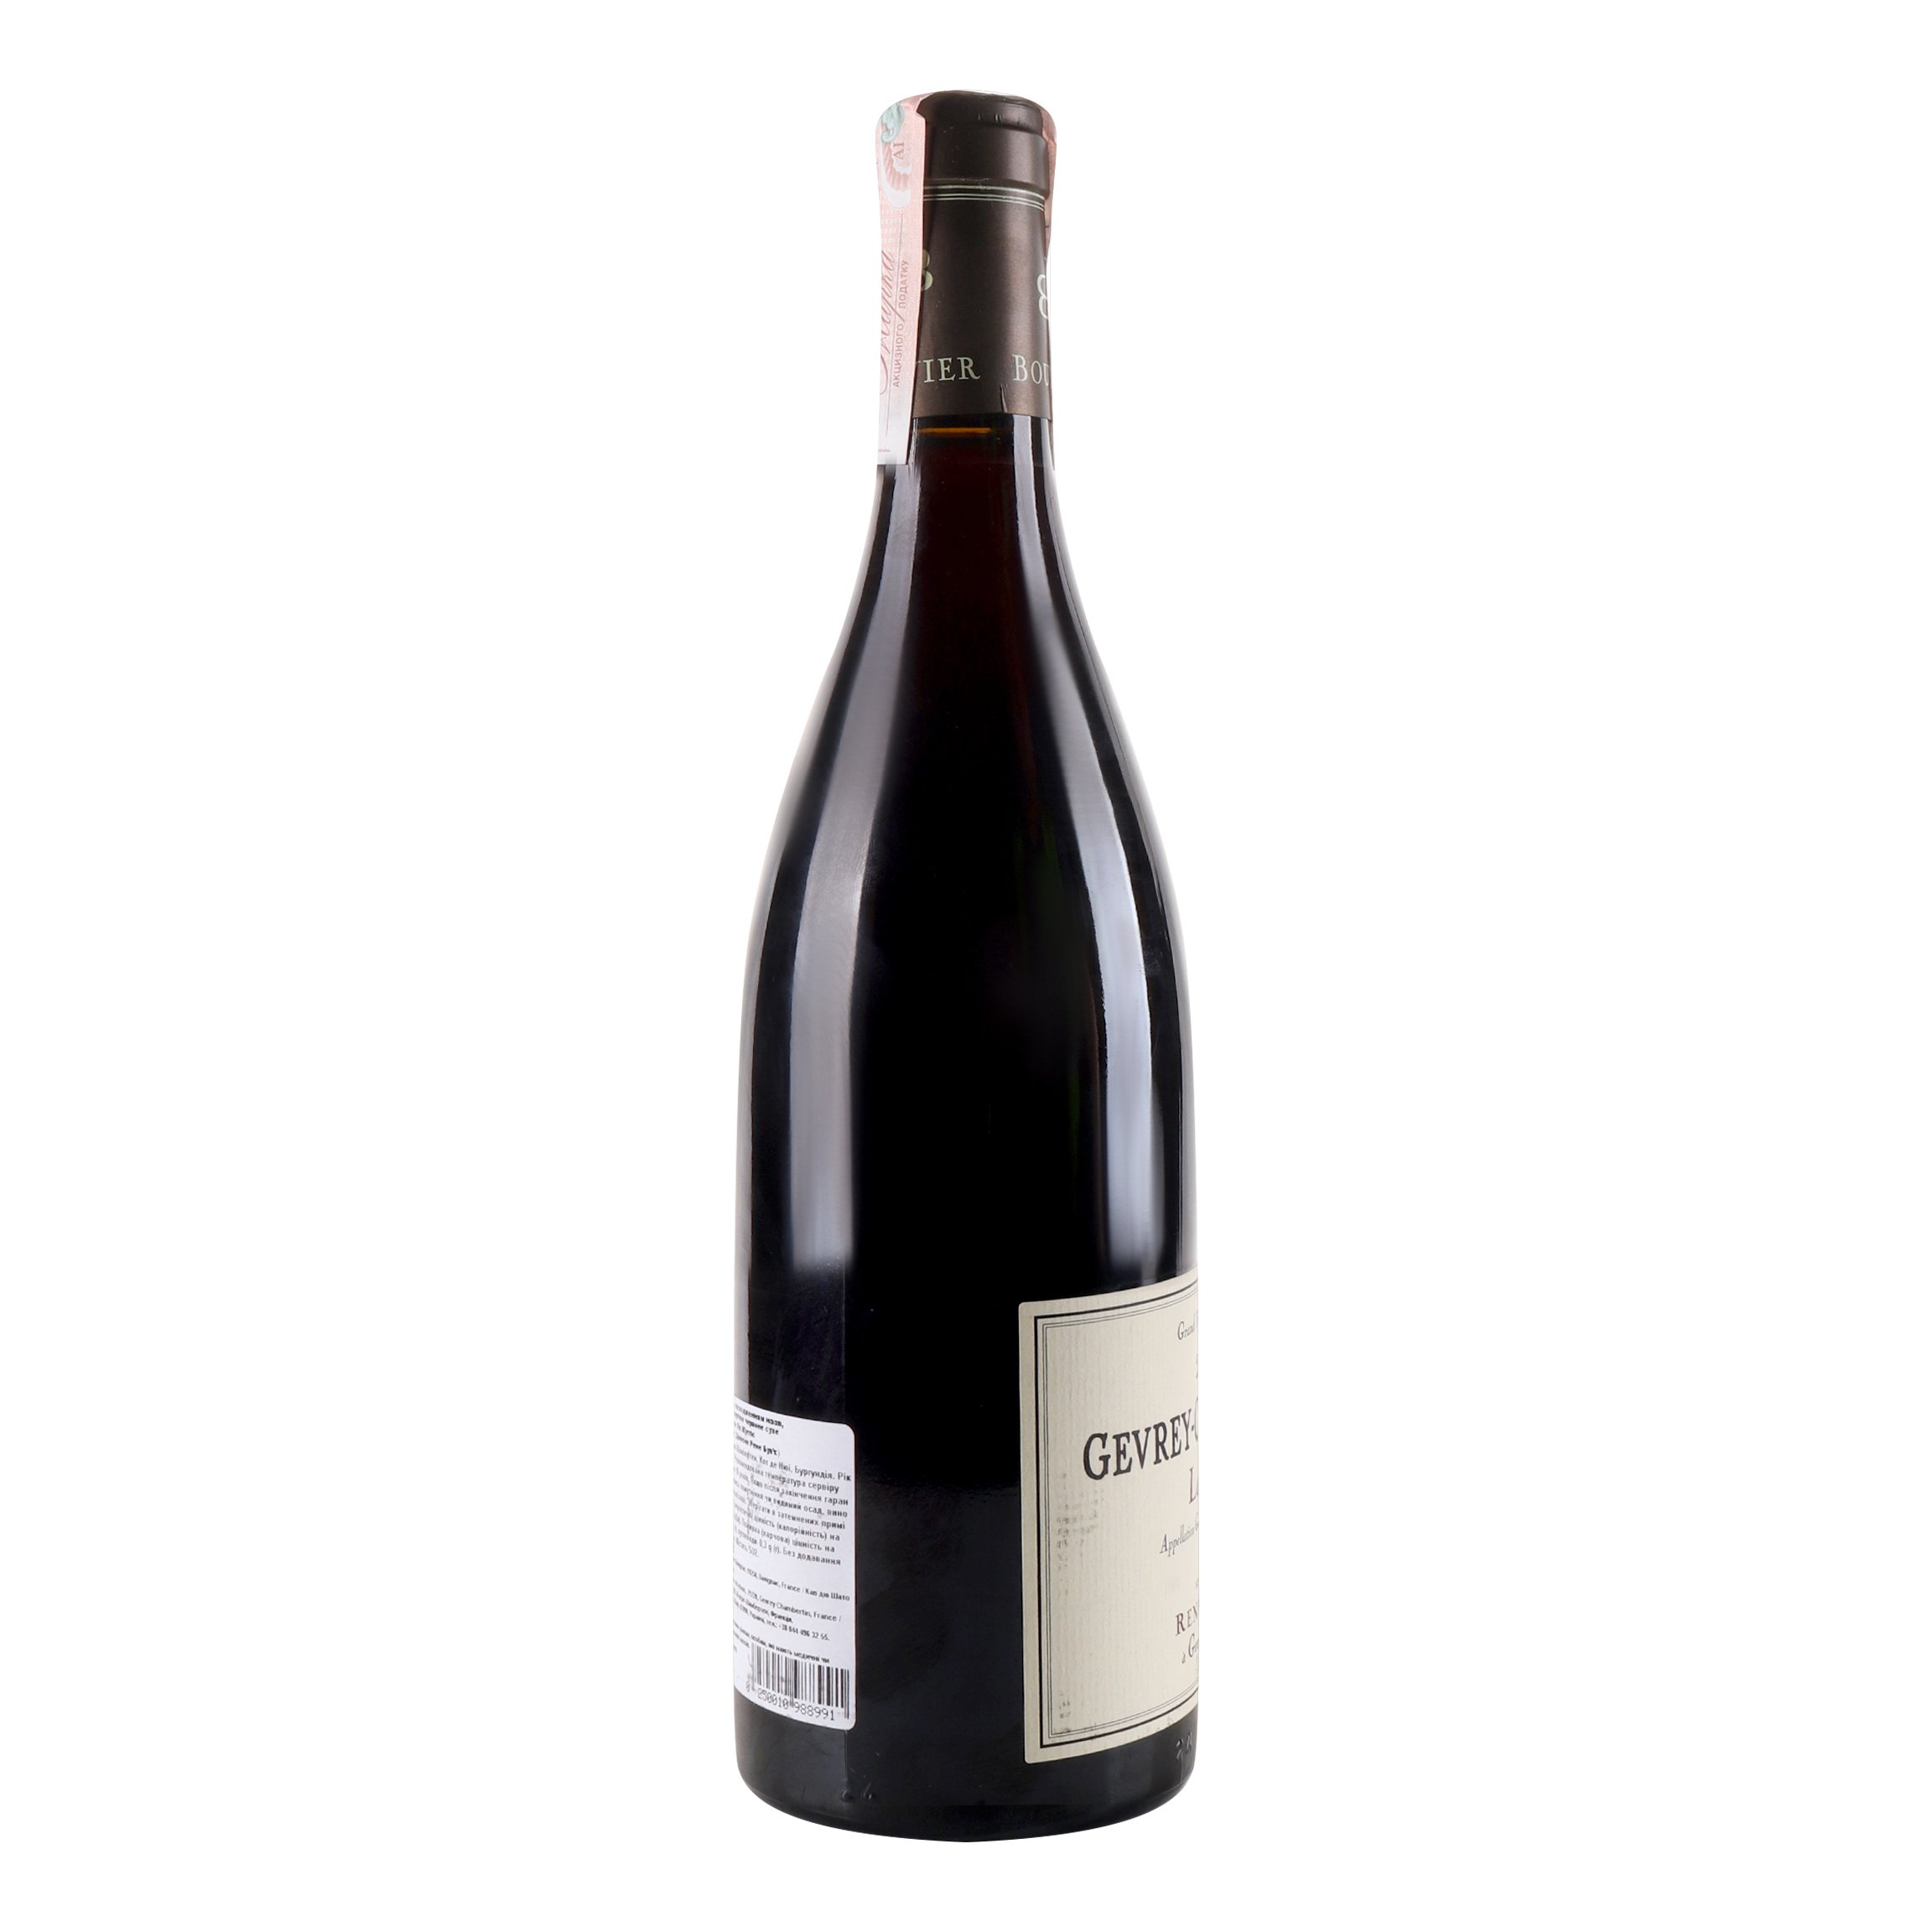 Вино Domaine Rene Bouvier Gevrey-Chambertin La Justice 2016 АОС/AOP, красное, сухое, 13%, 0,75 л (776106) - фото 3